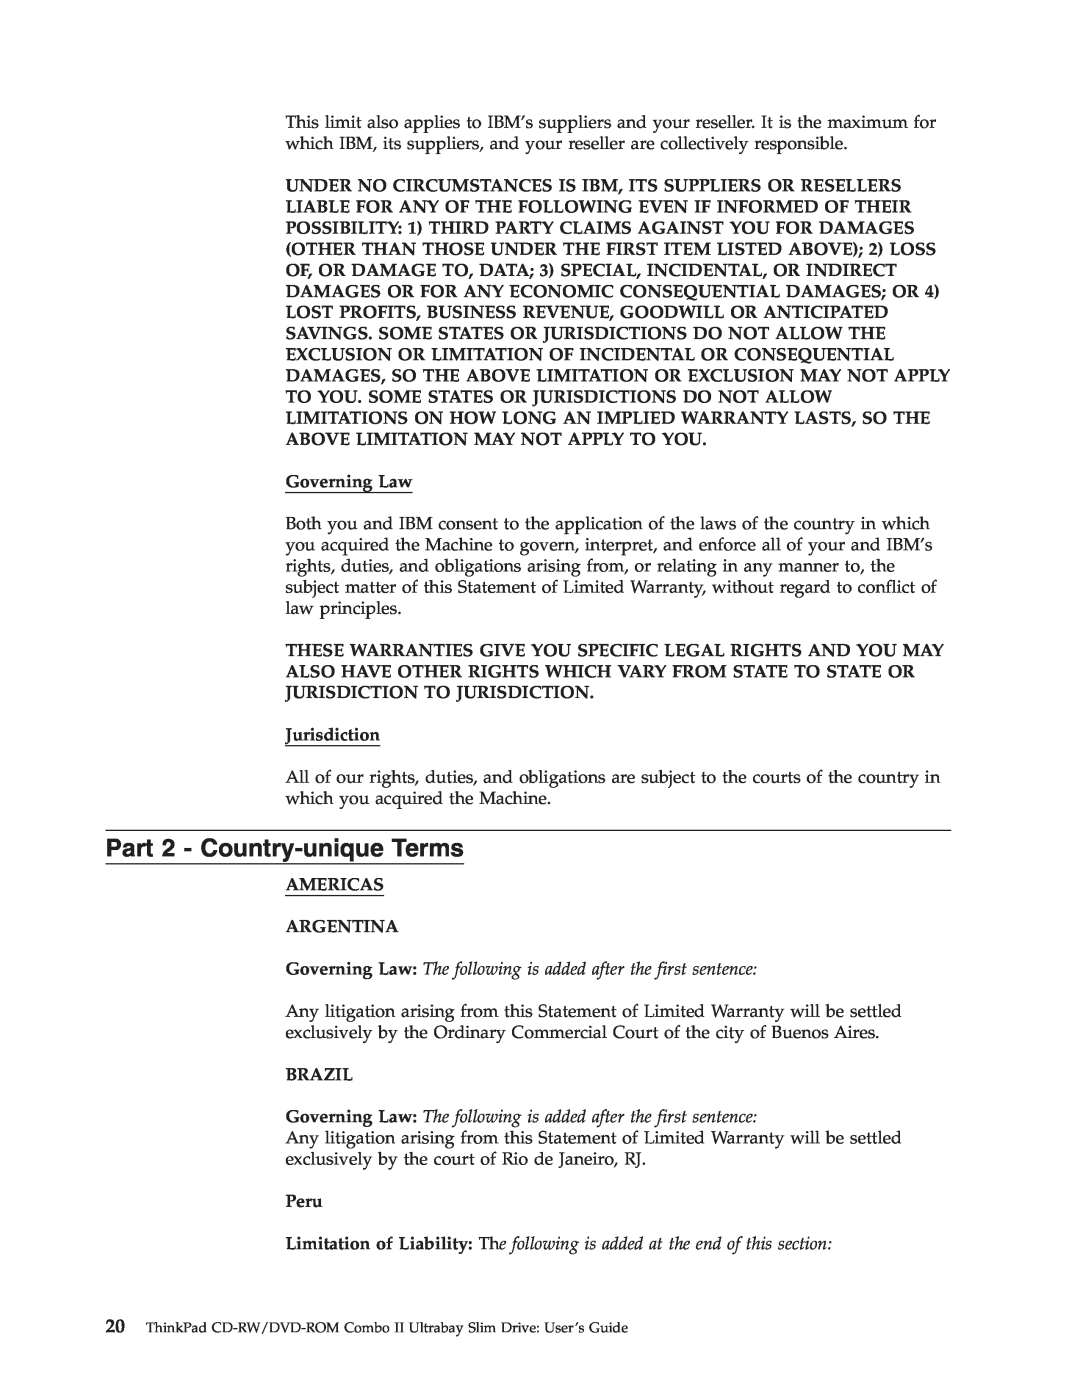 IBM 73P3292 manual Part 2 - Country-unique Terms, Governing Law, Jurisdiction, Americas Argentina, Brazil, Peru 